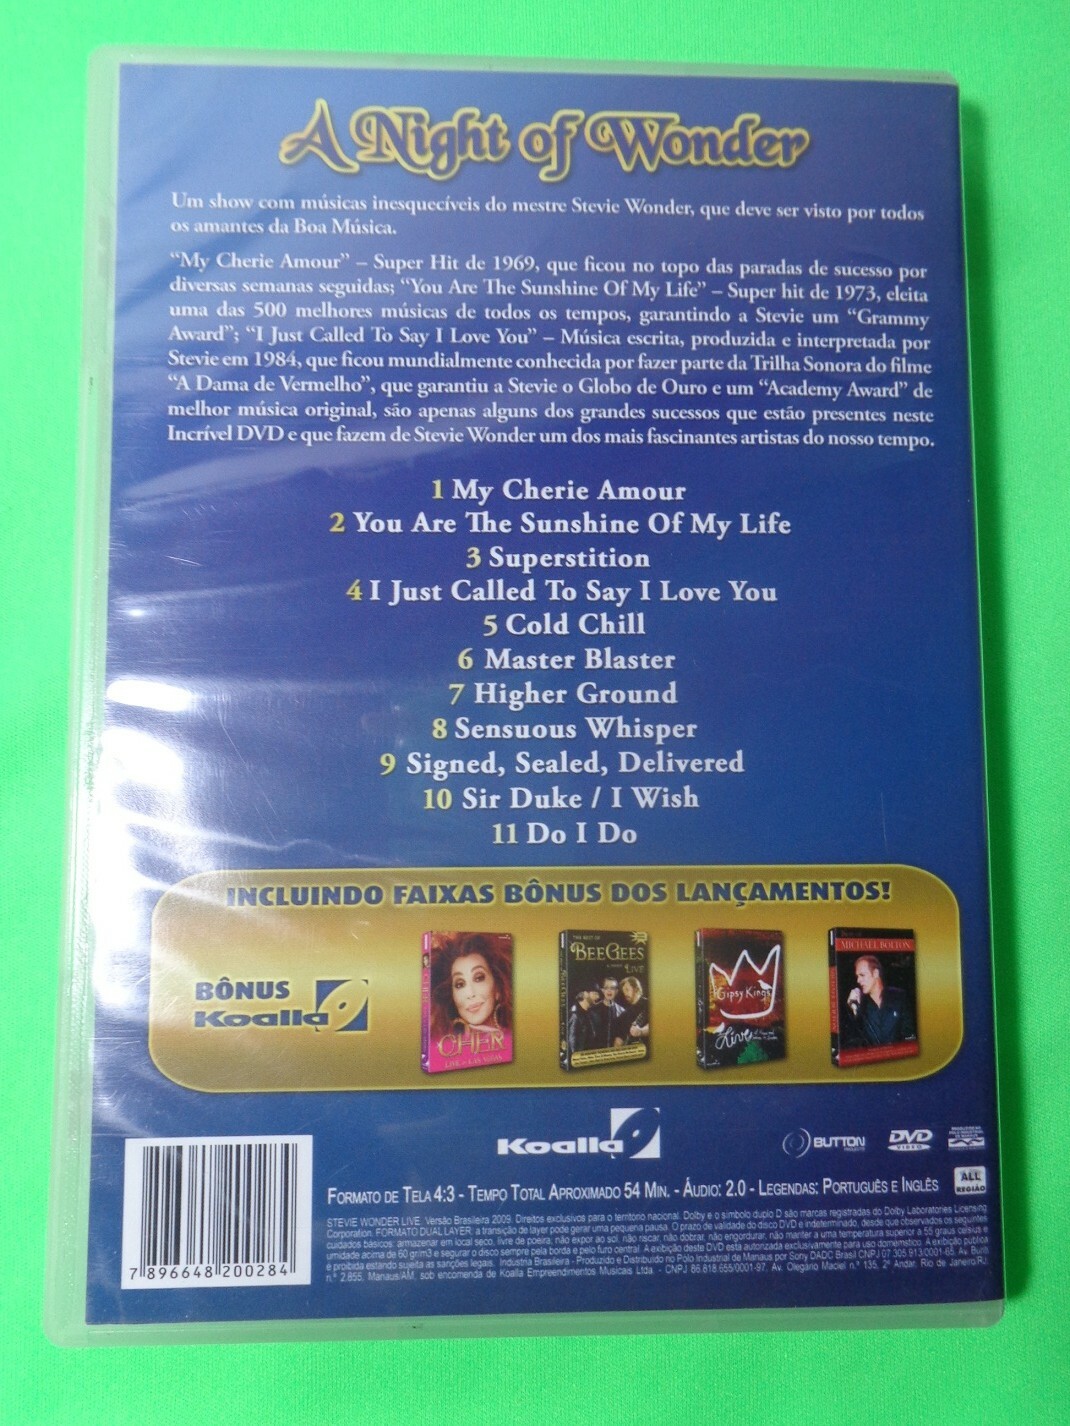 DVD - Stevie Wonder - Live